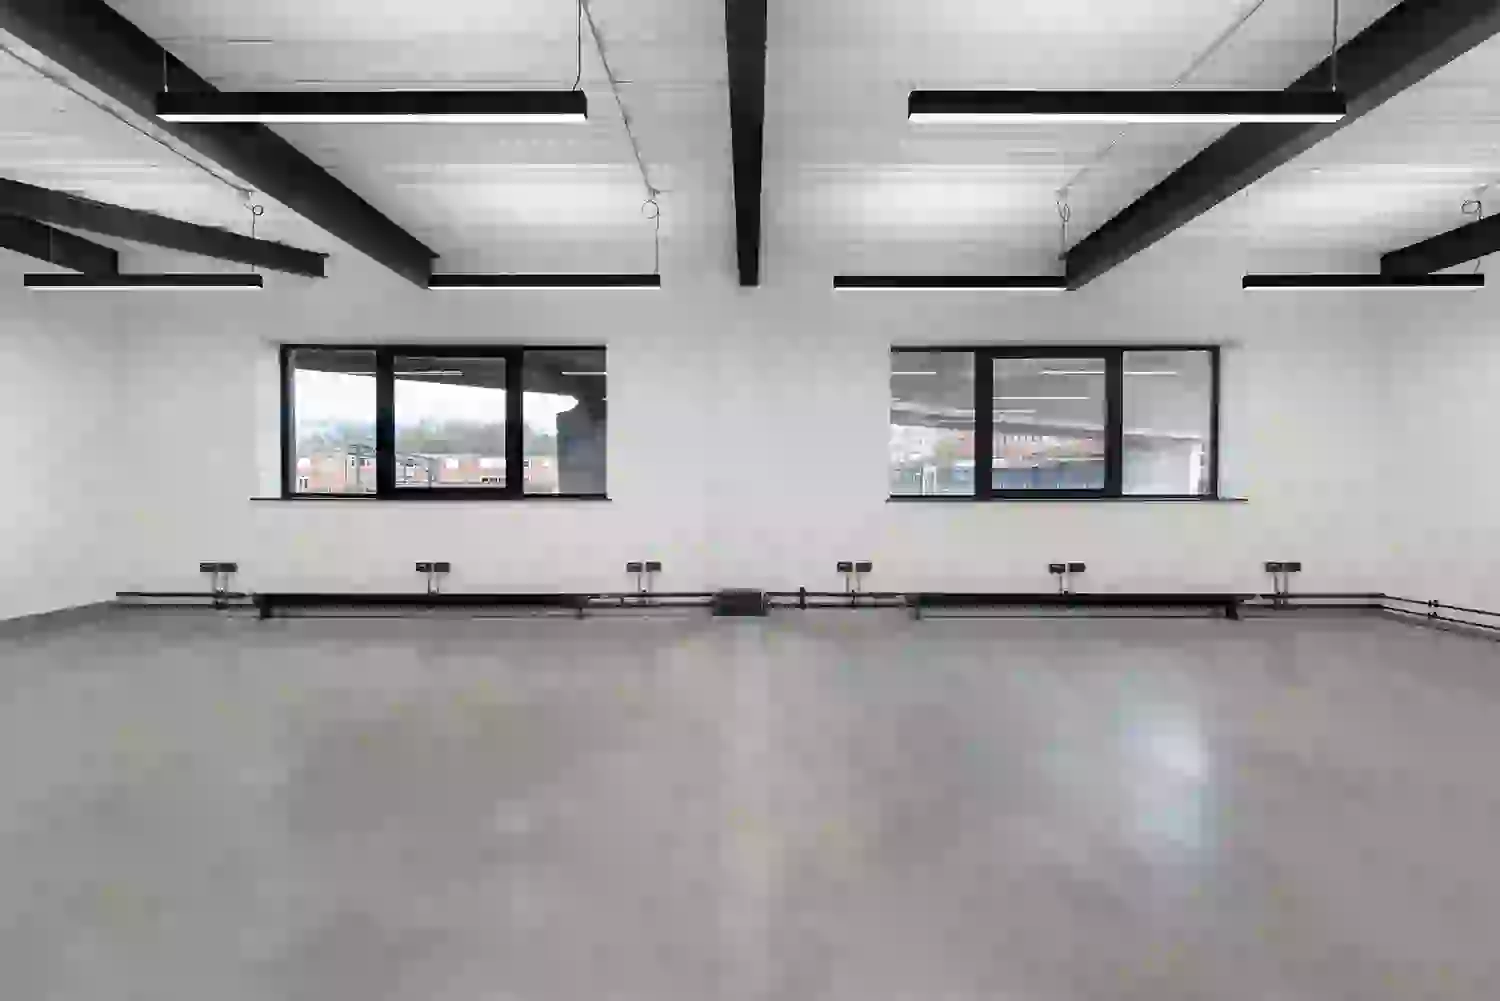 Office space to rent at Westbourne Studios, 242 Acklam Road, Portobello, London, unit WE.118, 985 sq ft (91 sq m).